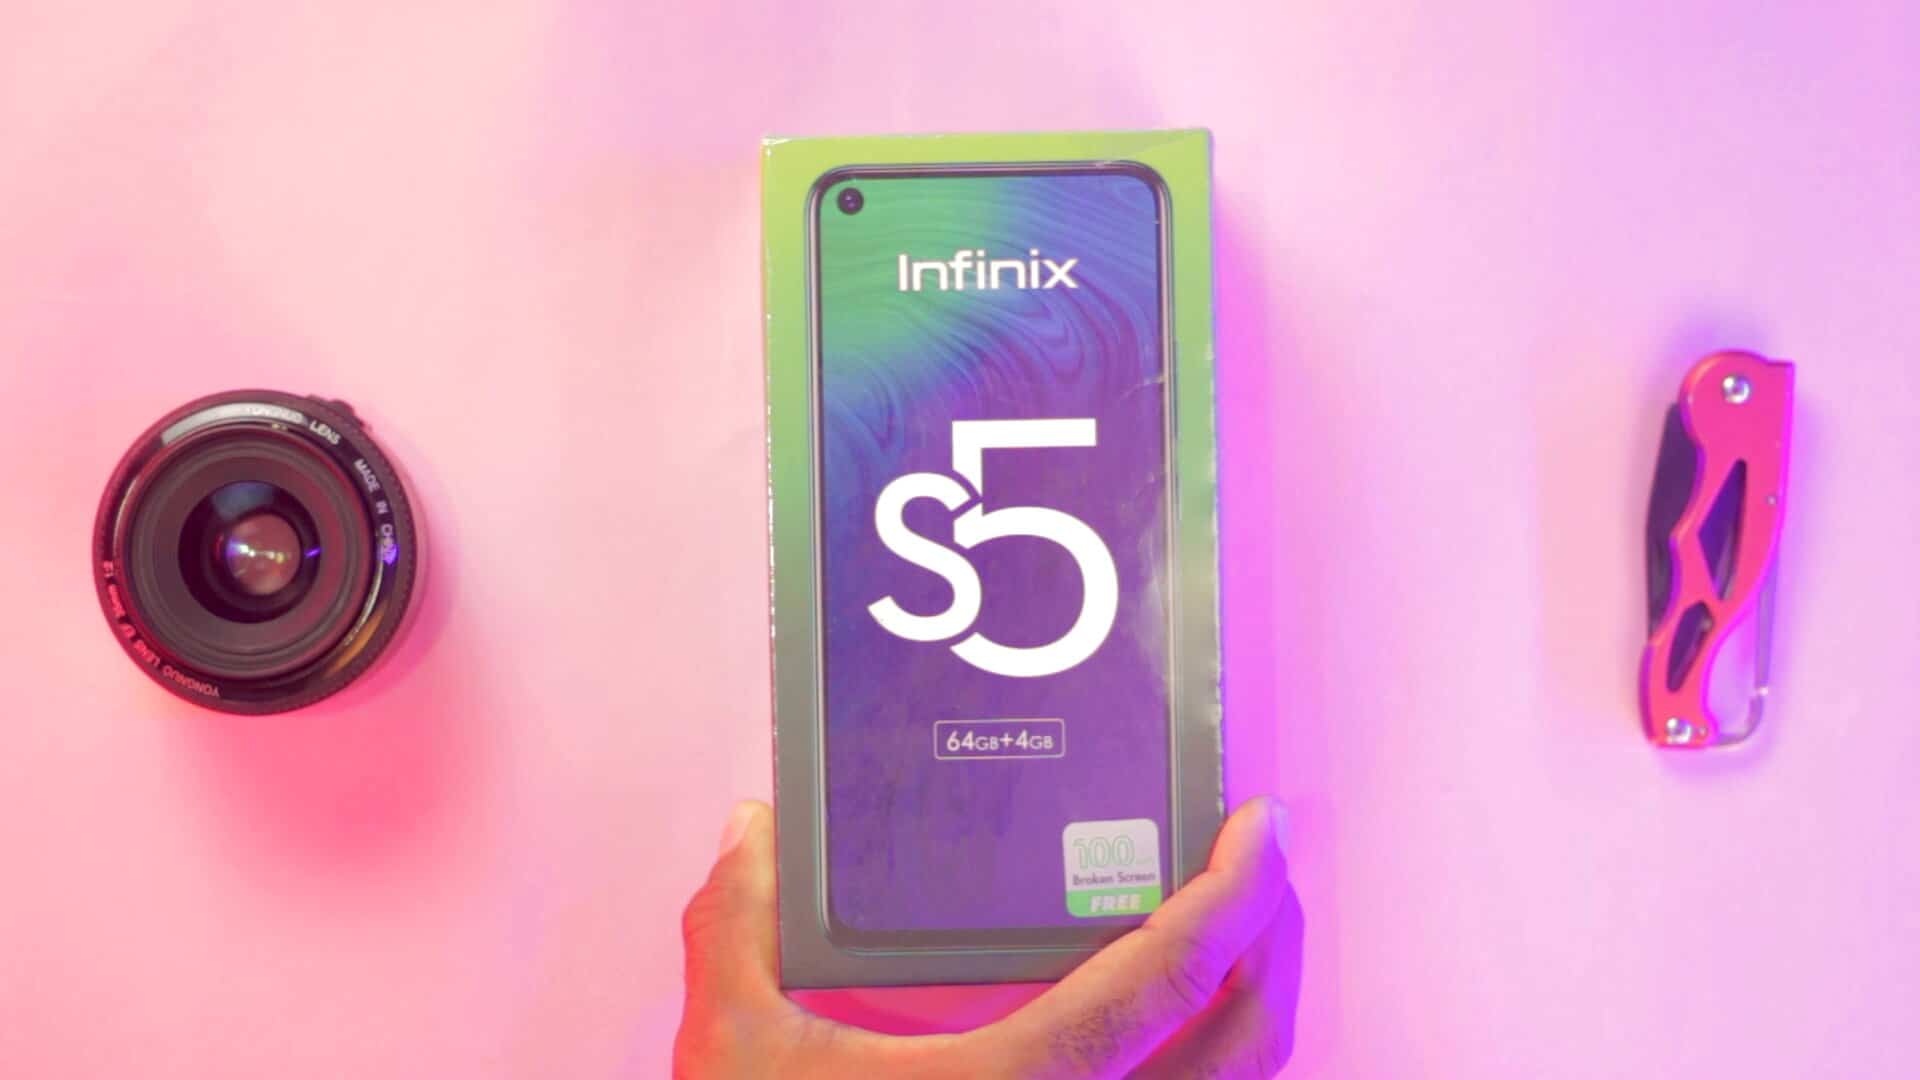 Infinix S5 Box